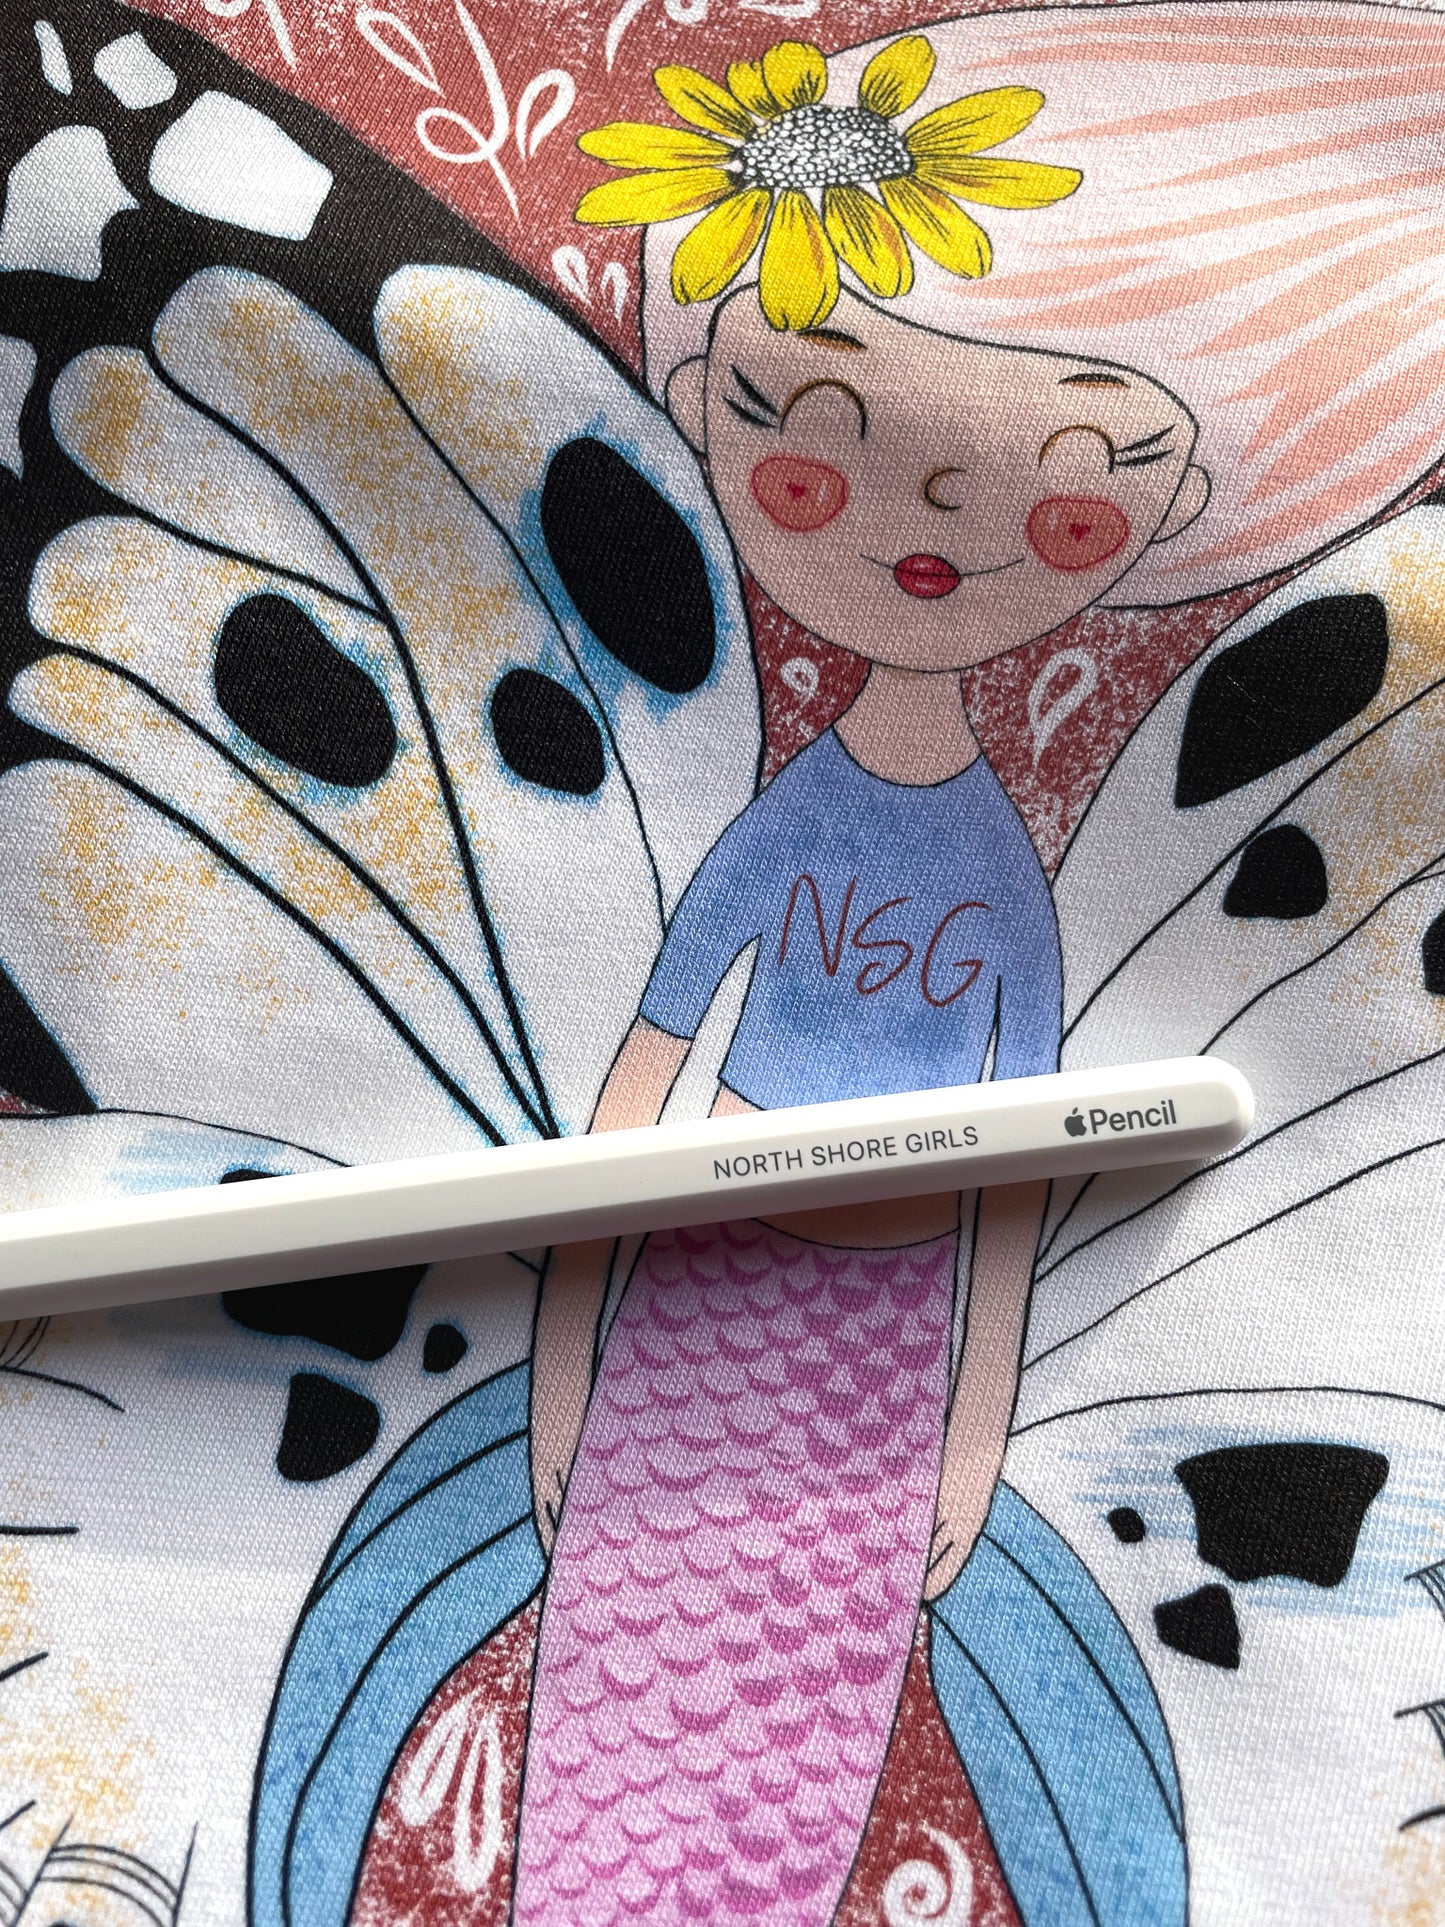 Cute mermaid Butterfly Haleiwa Girl NSG. Art by Nadia Watts. North Shore Girls Kids Tee collection